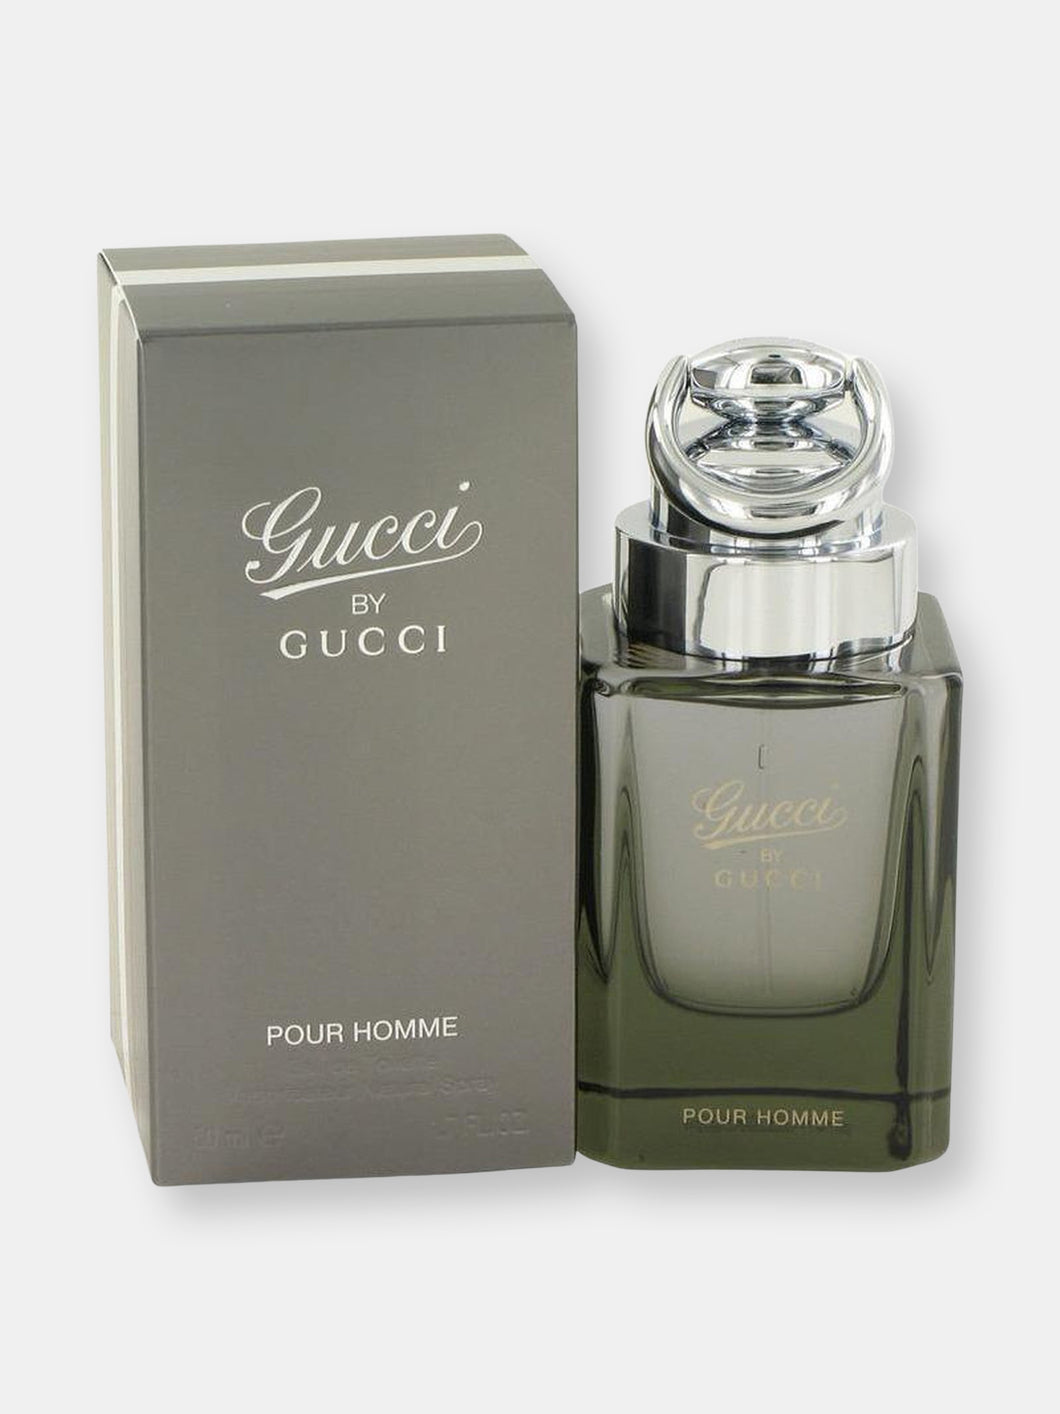 Gucci (New) by Gucci Eau De Toilette Spray 1.6 oz